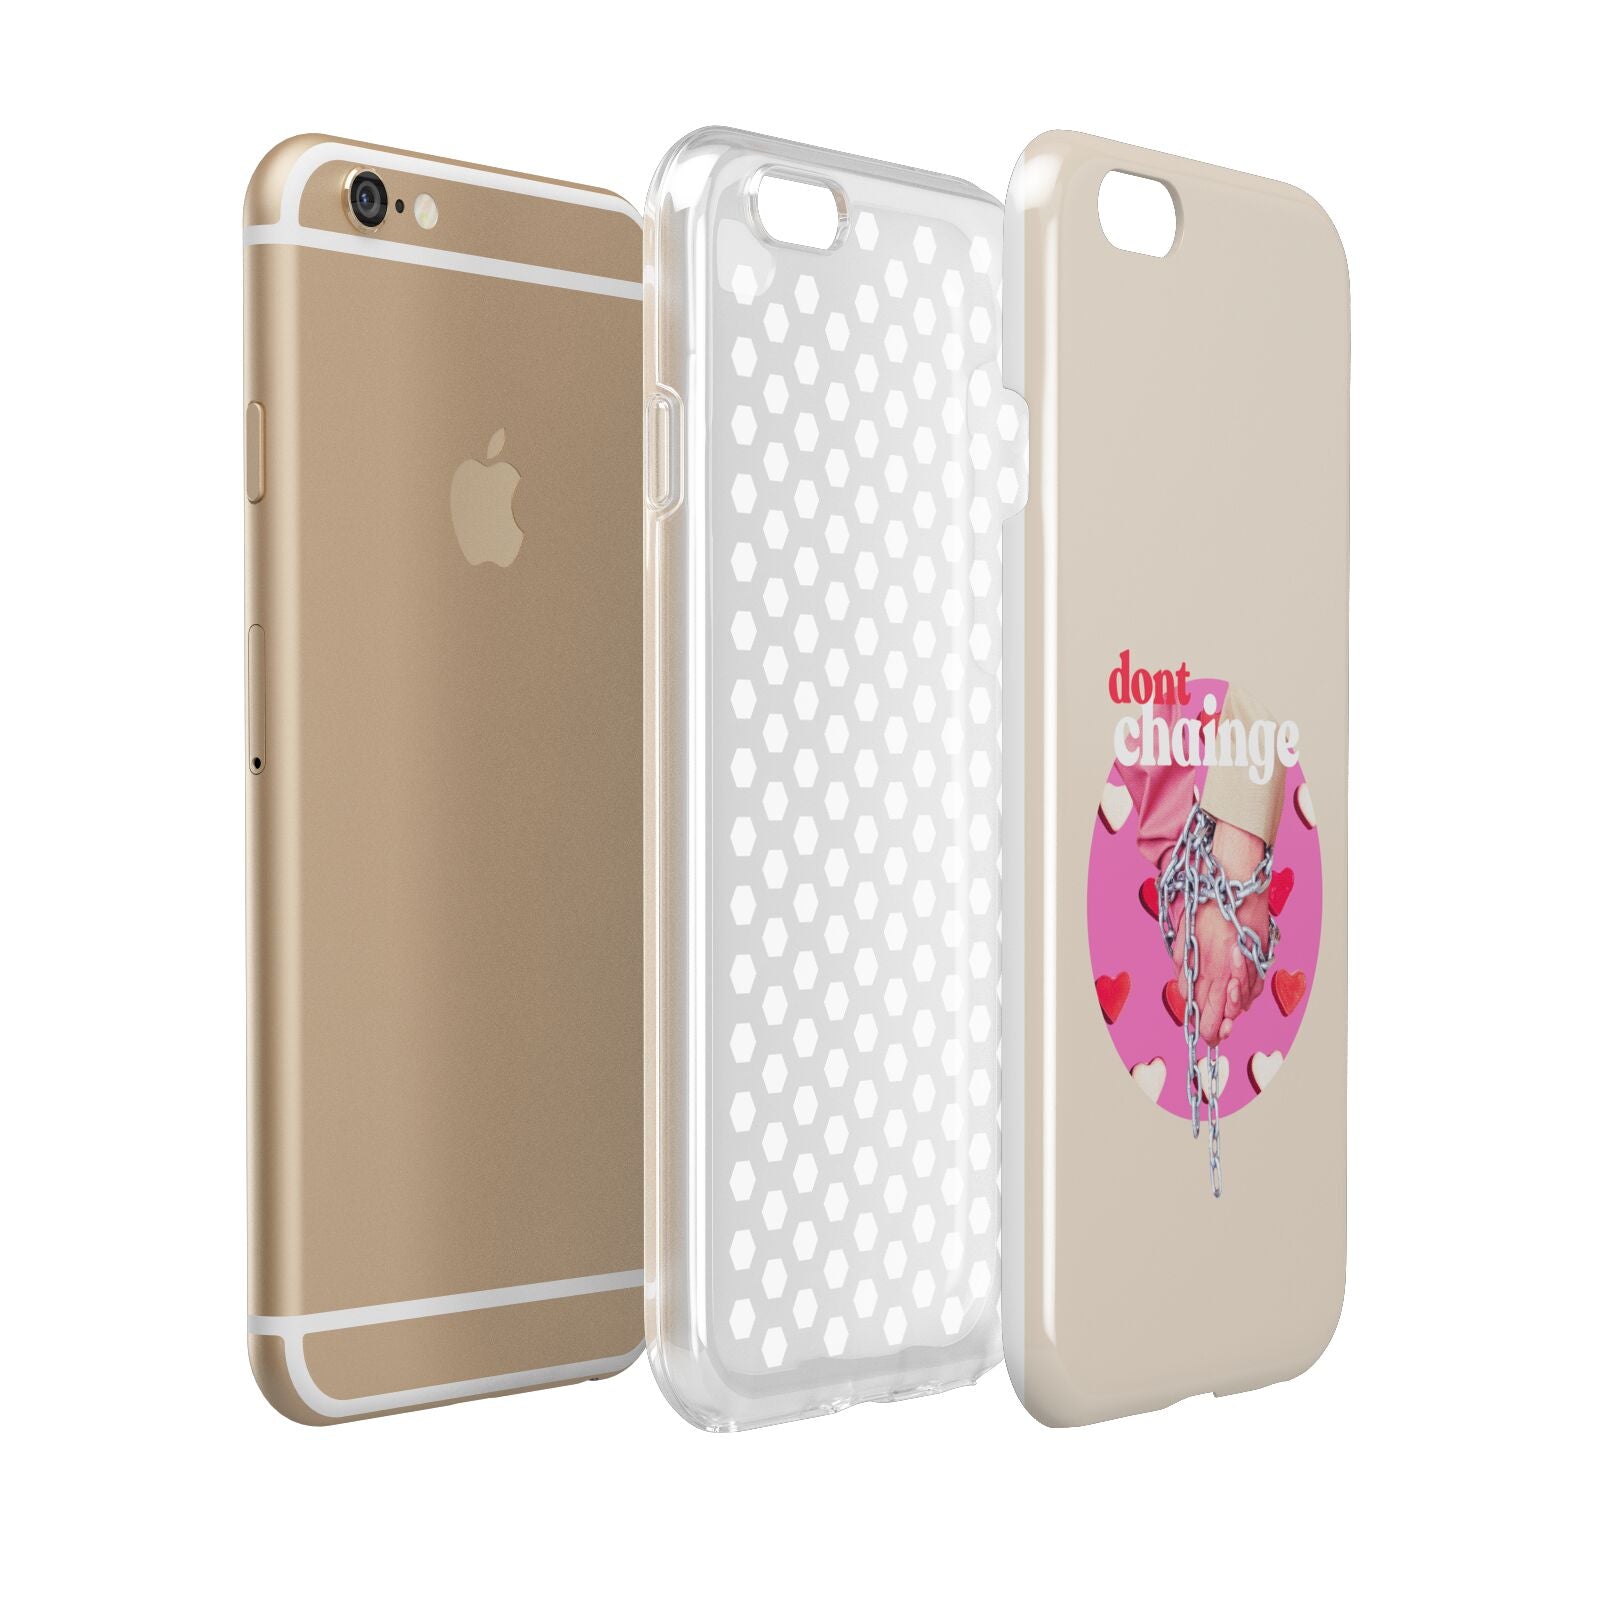 Retro Valentines Quote Apple iPhone 6 3D Tough Case Expanded view